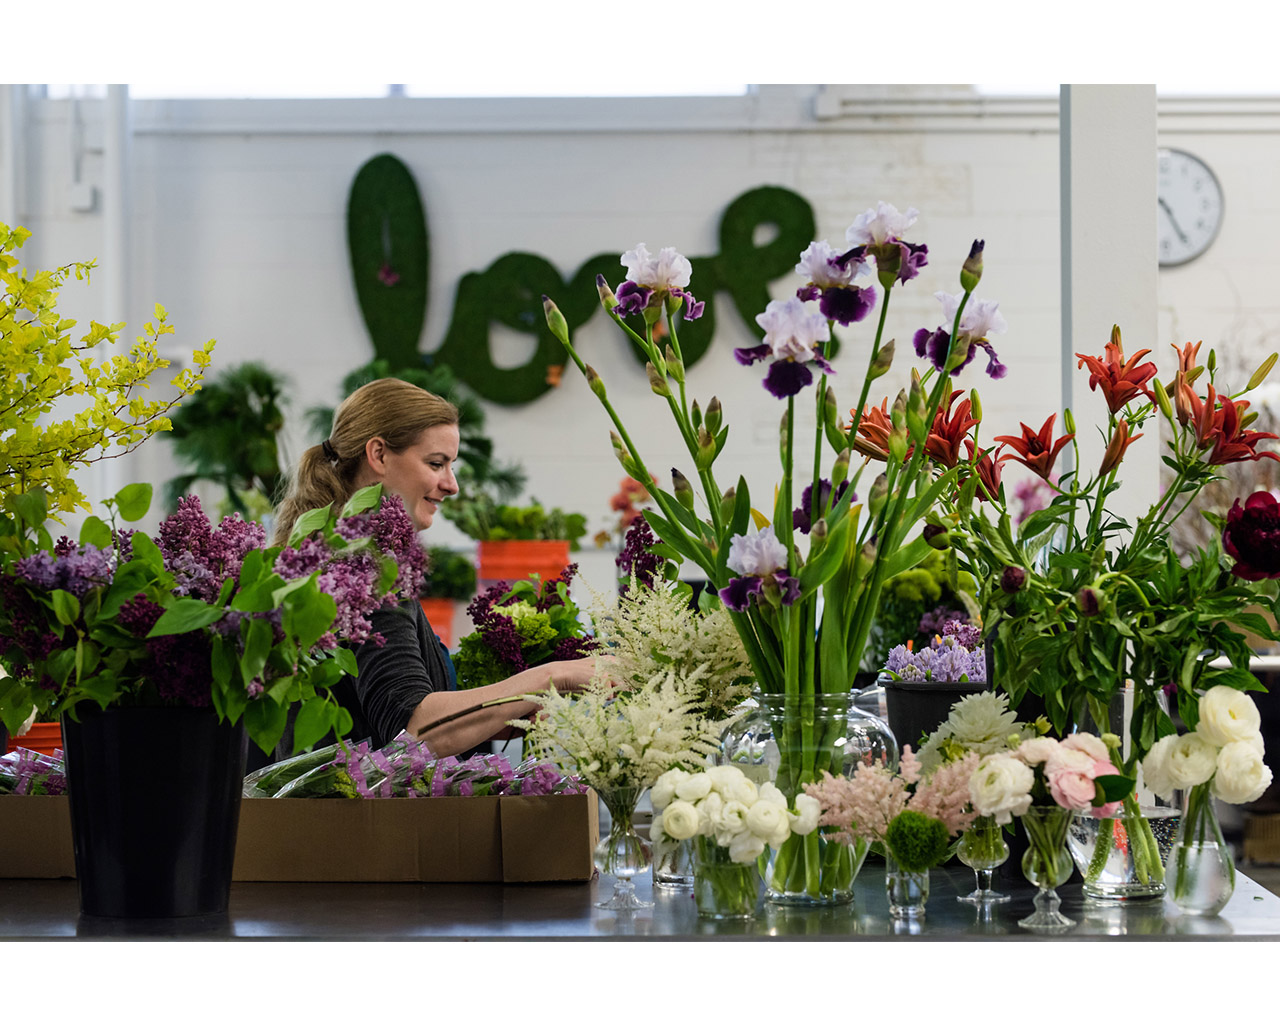 The HMR Designs Floral Design Studio in Chicago